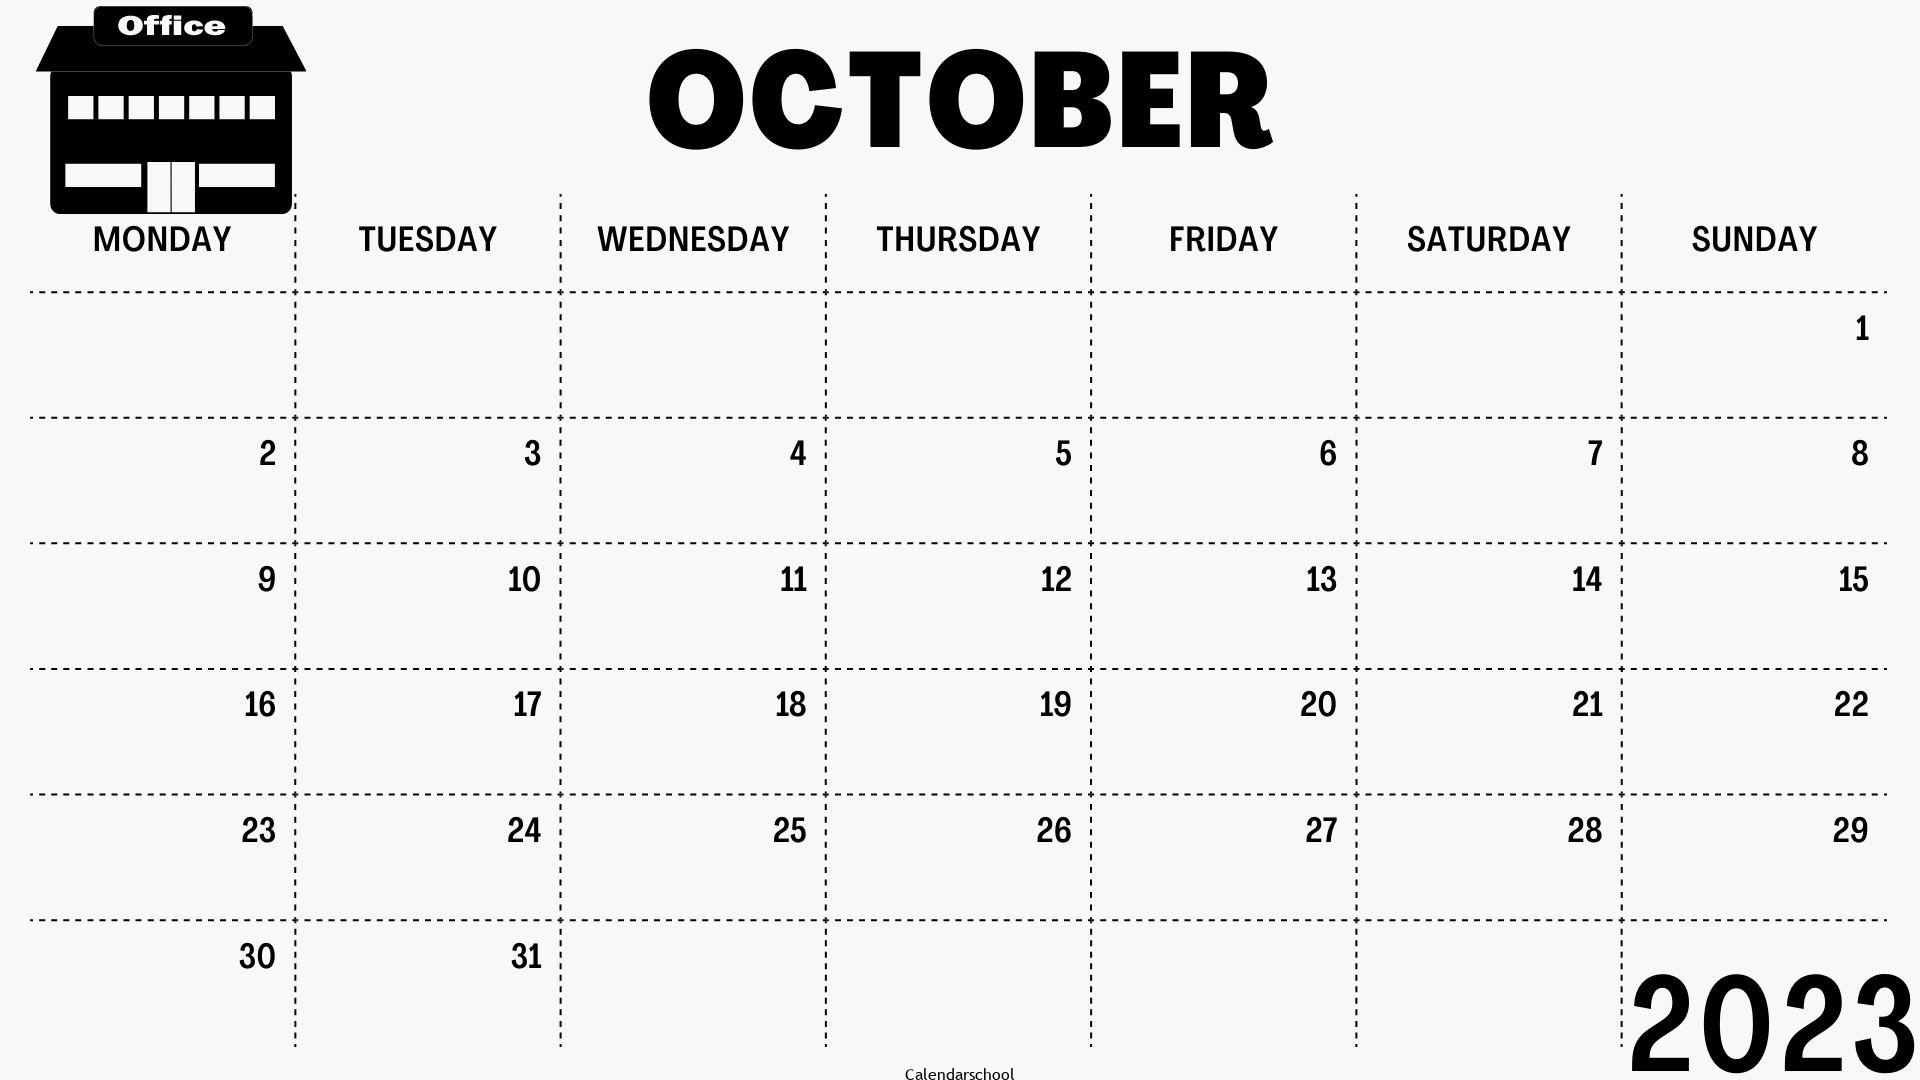 October 2023 Weekly Calendar Template